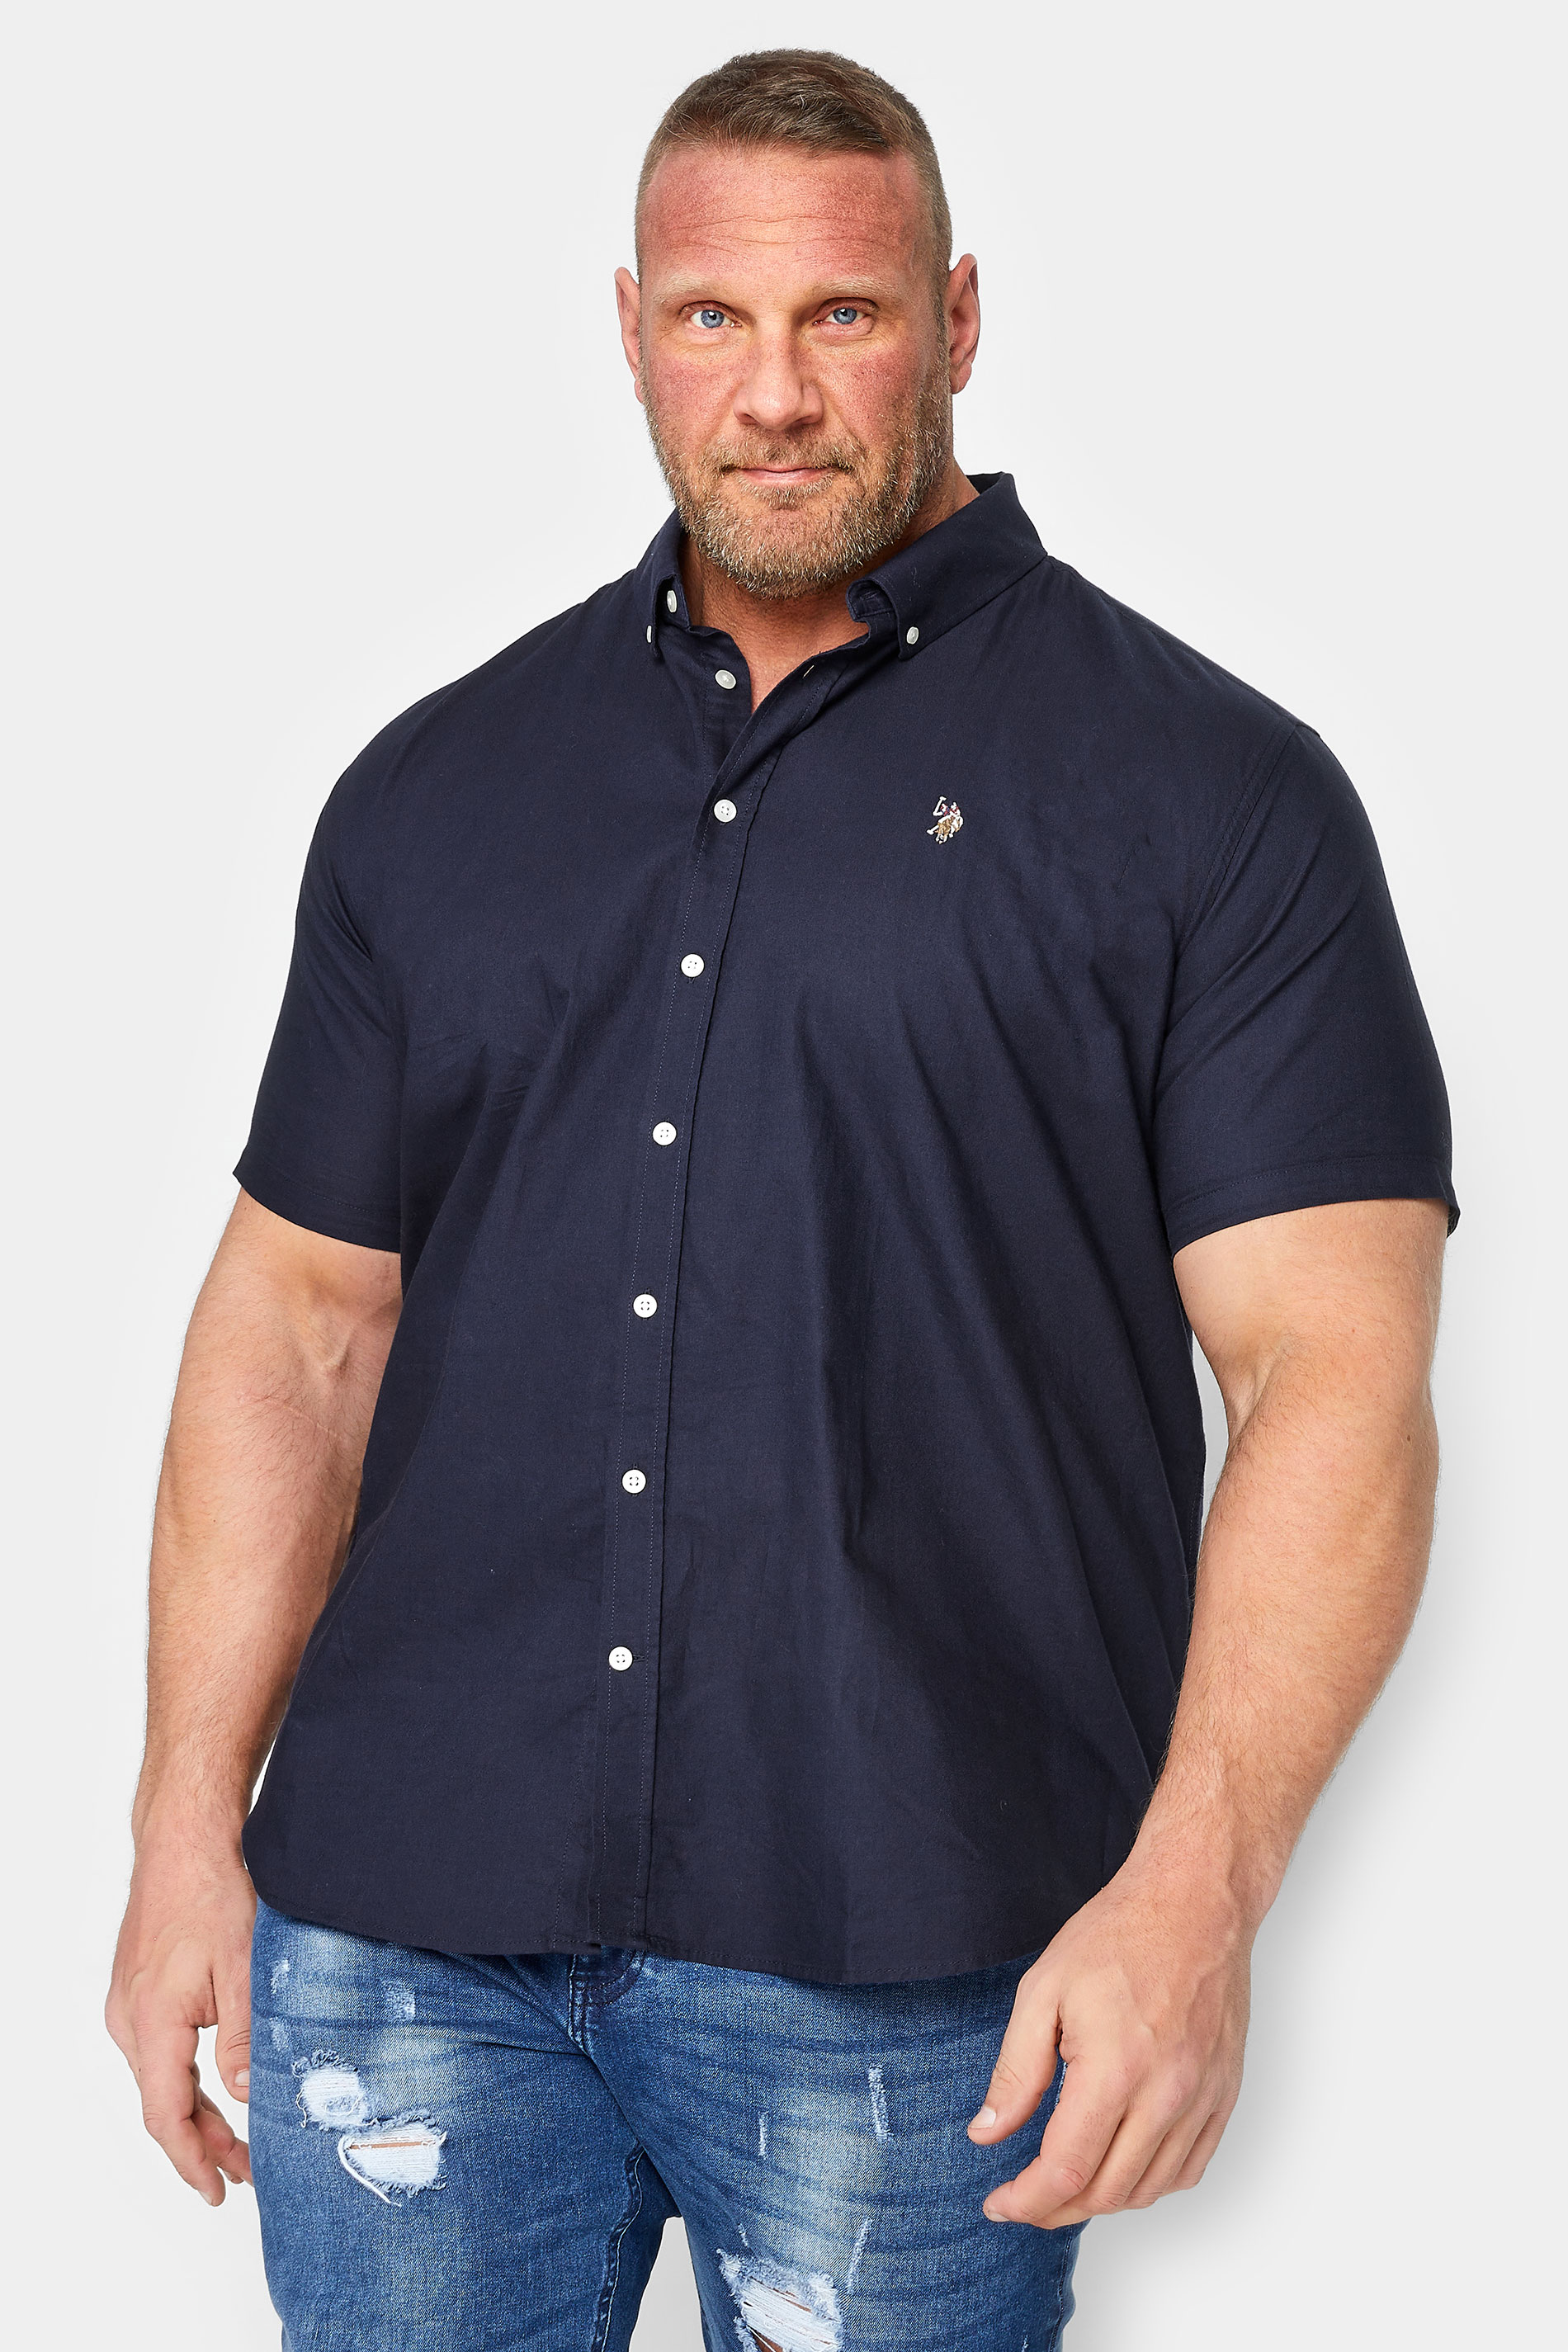 U.S. POLO ASSN. Big & Tall Navy Blue Short Sleeve Shirt | BadRhino  1